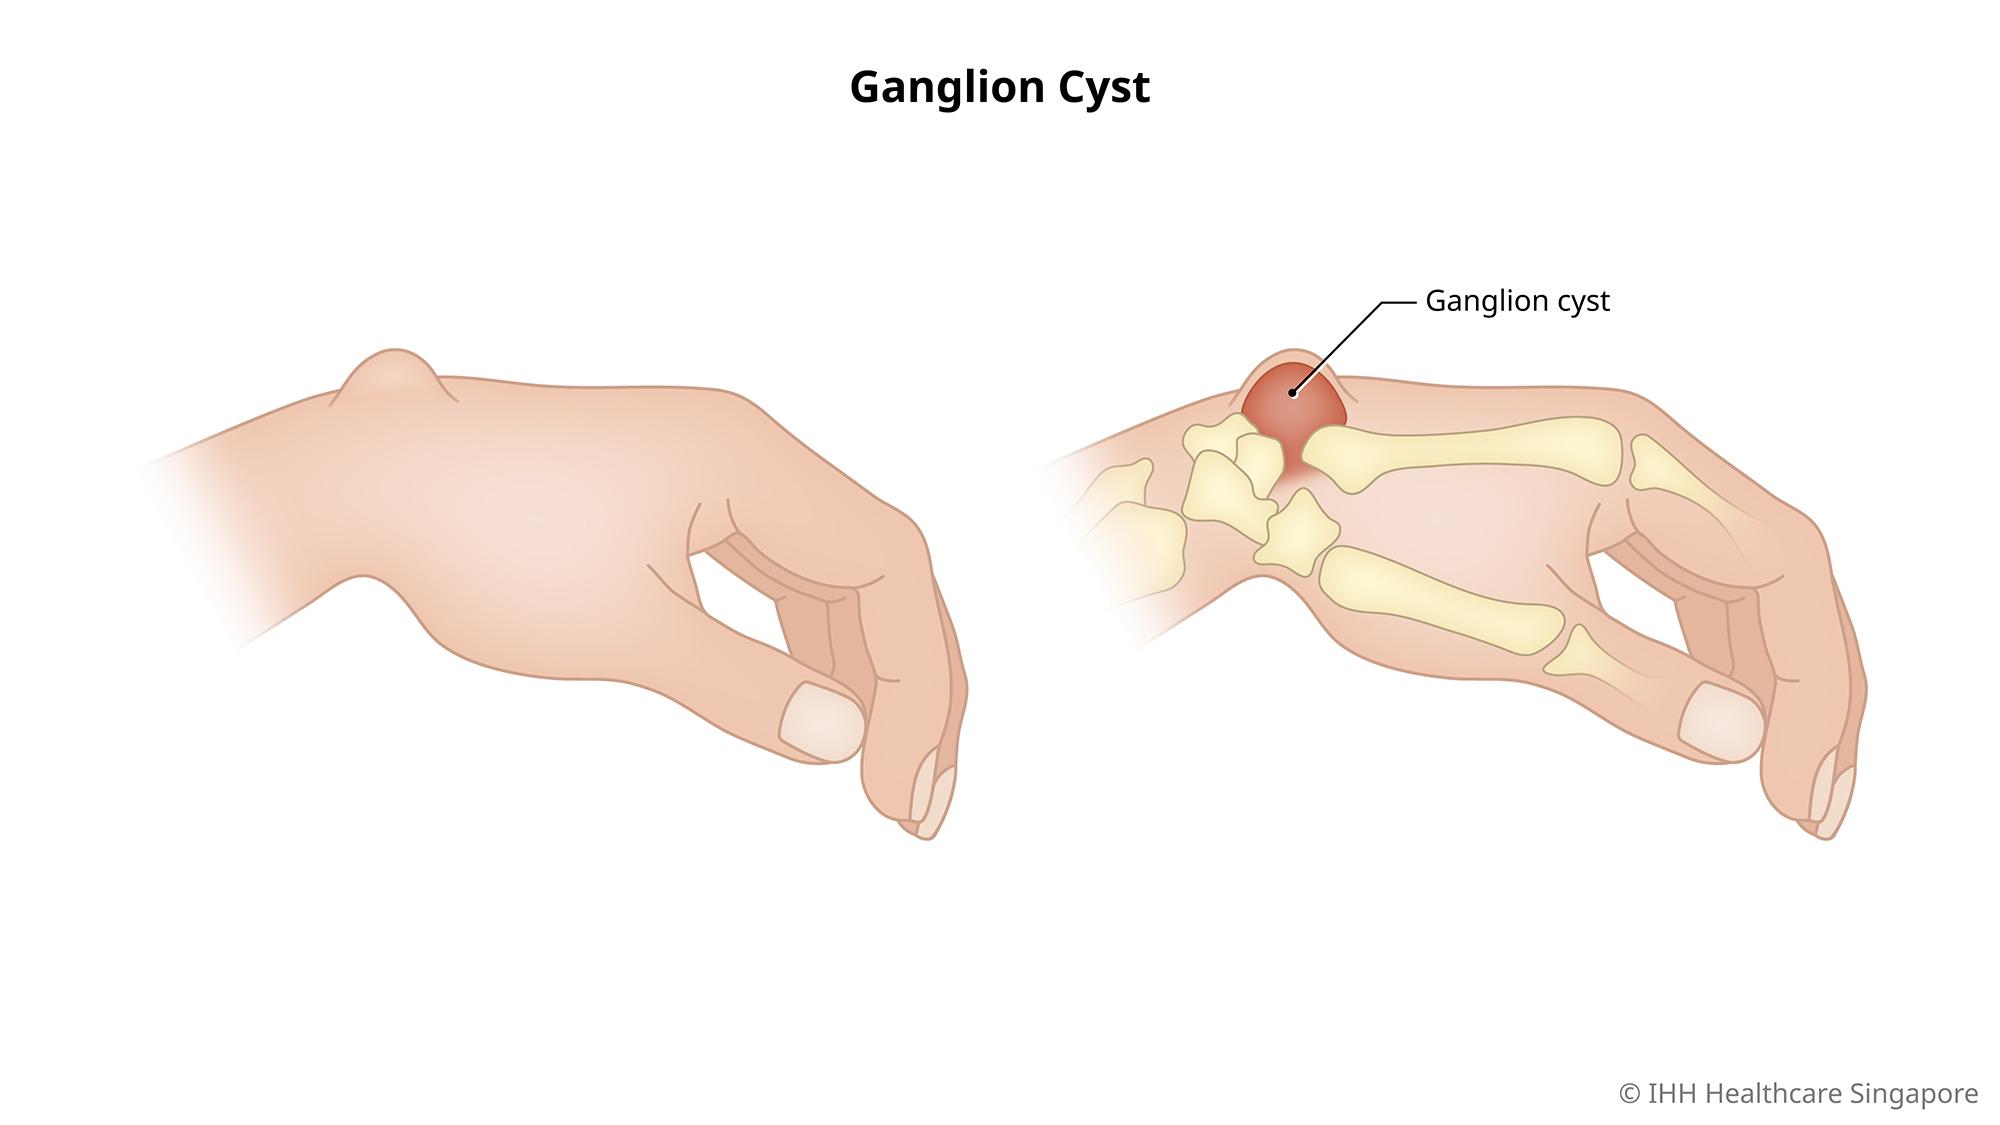 Ganglion cysts